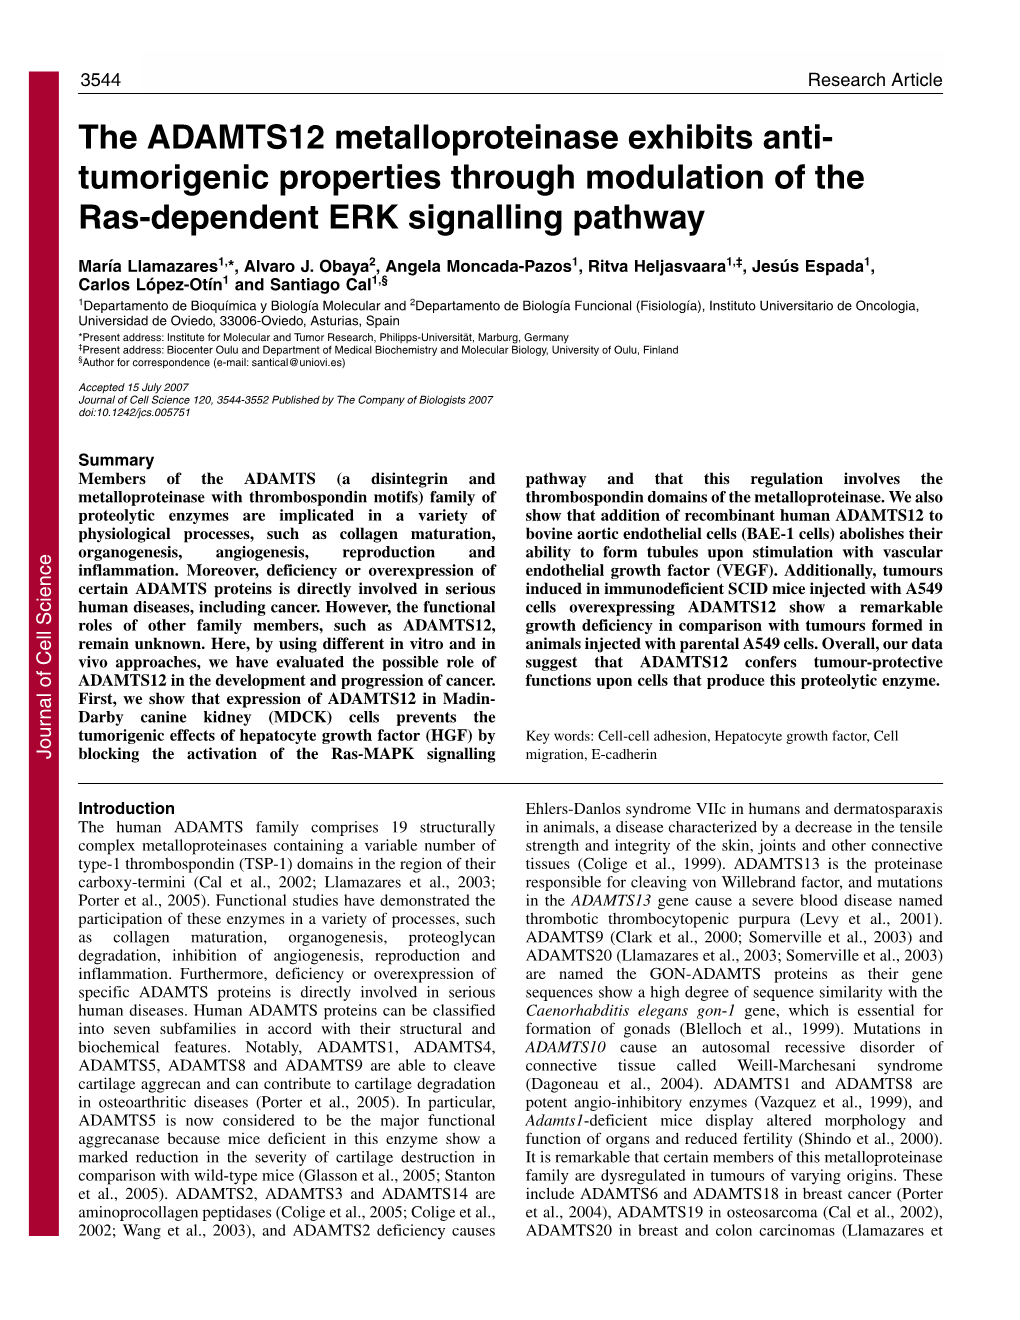 The ADAMTS12 Metalloproteinase Exhibits Anti- Tumorigenic Properties Through Modulation of the Ras-Dependent ERK Signalling Pathway